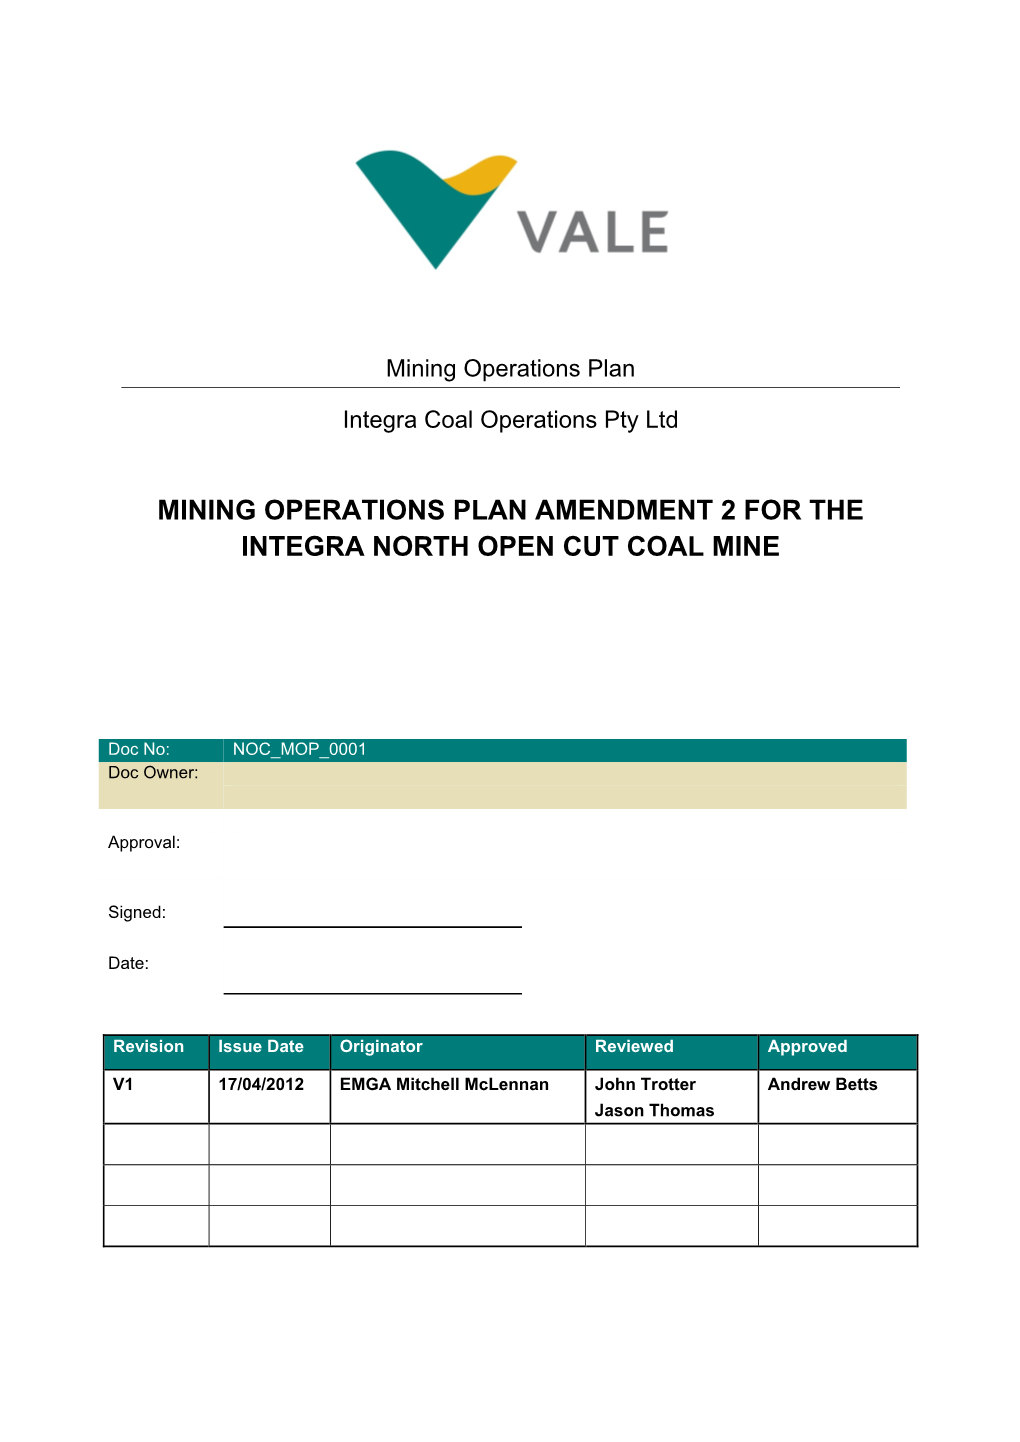 Mining Operations Plan Amendment 2 for the Integra North Open Cut Coal Mine